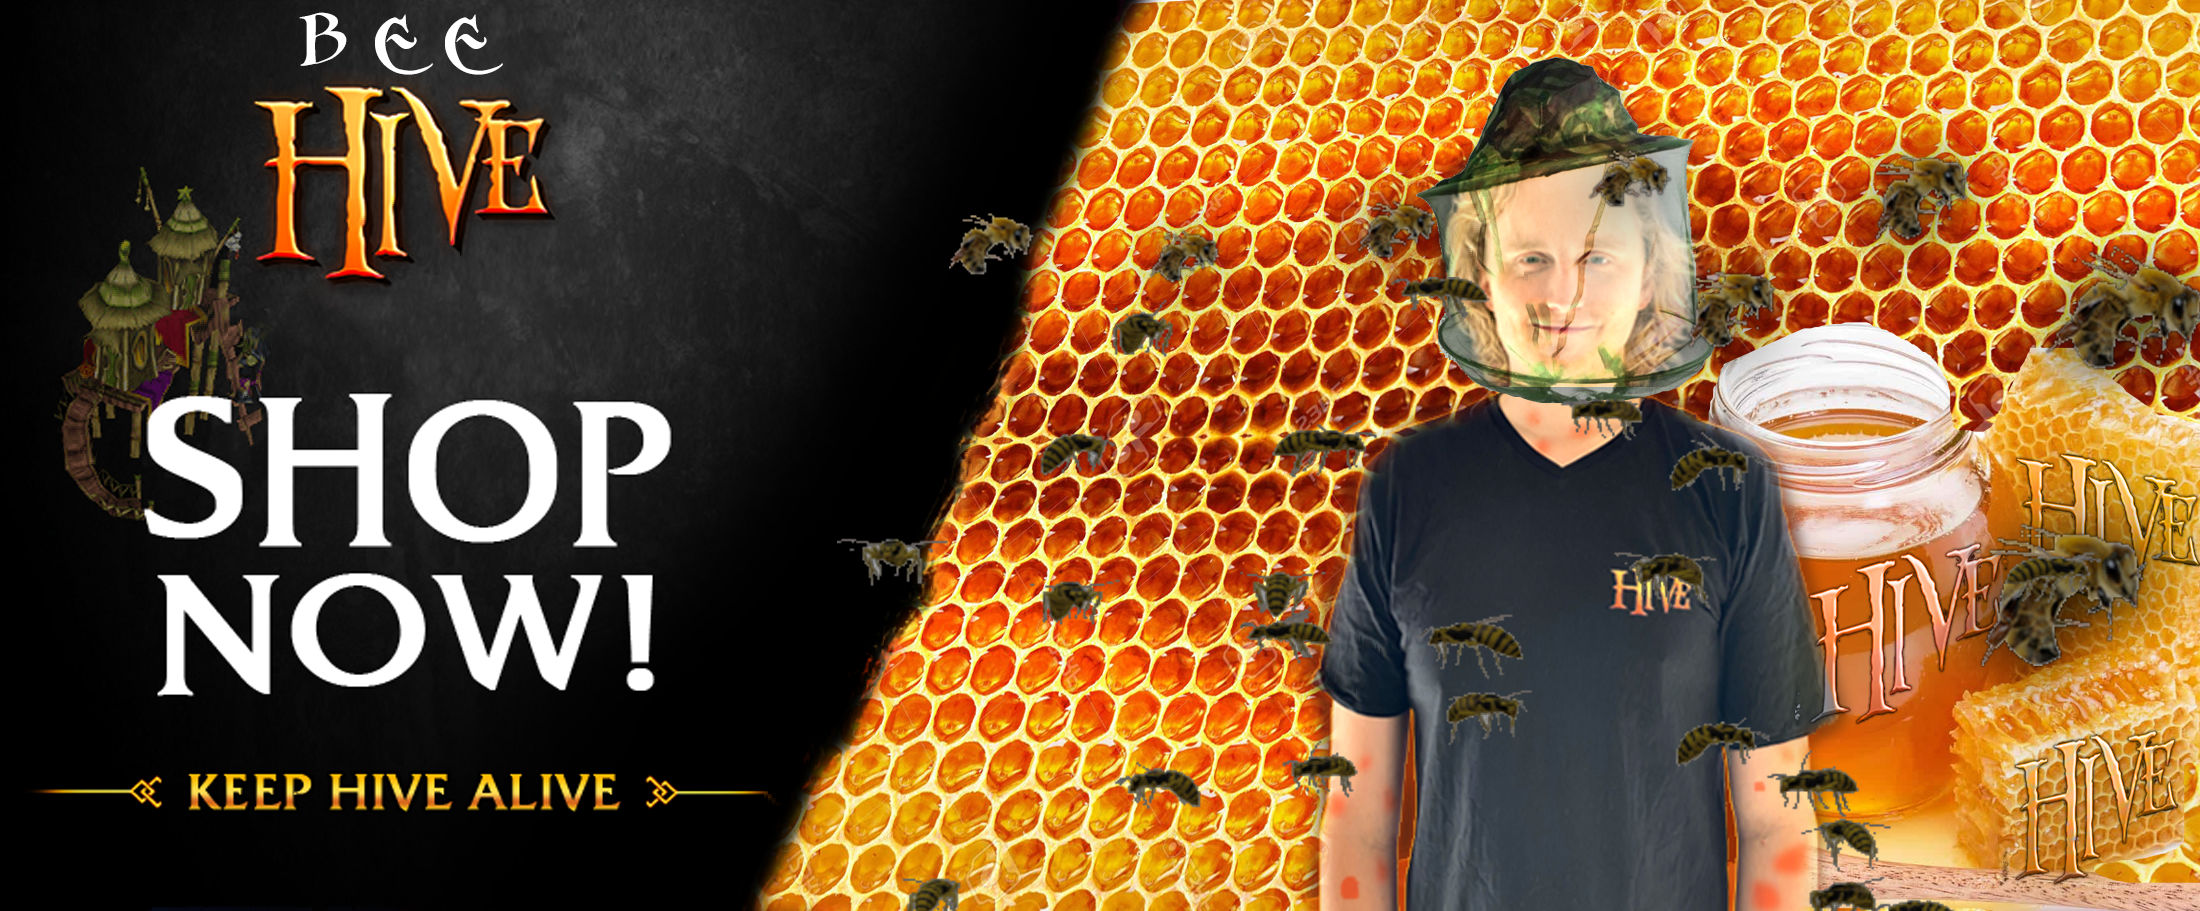 Keep the Bee Hive alive!